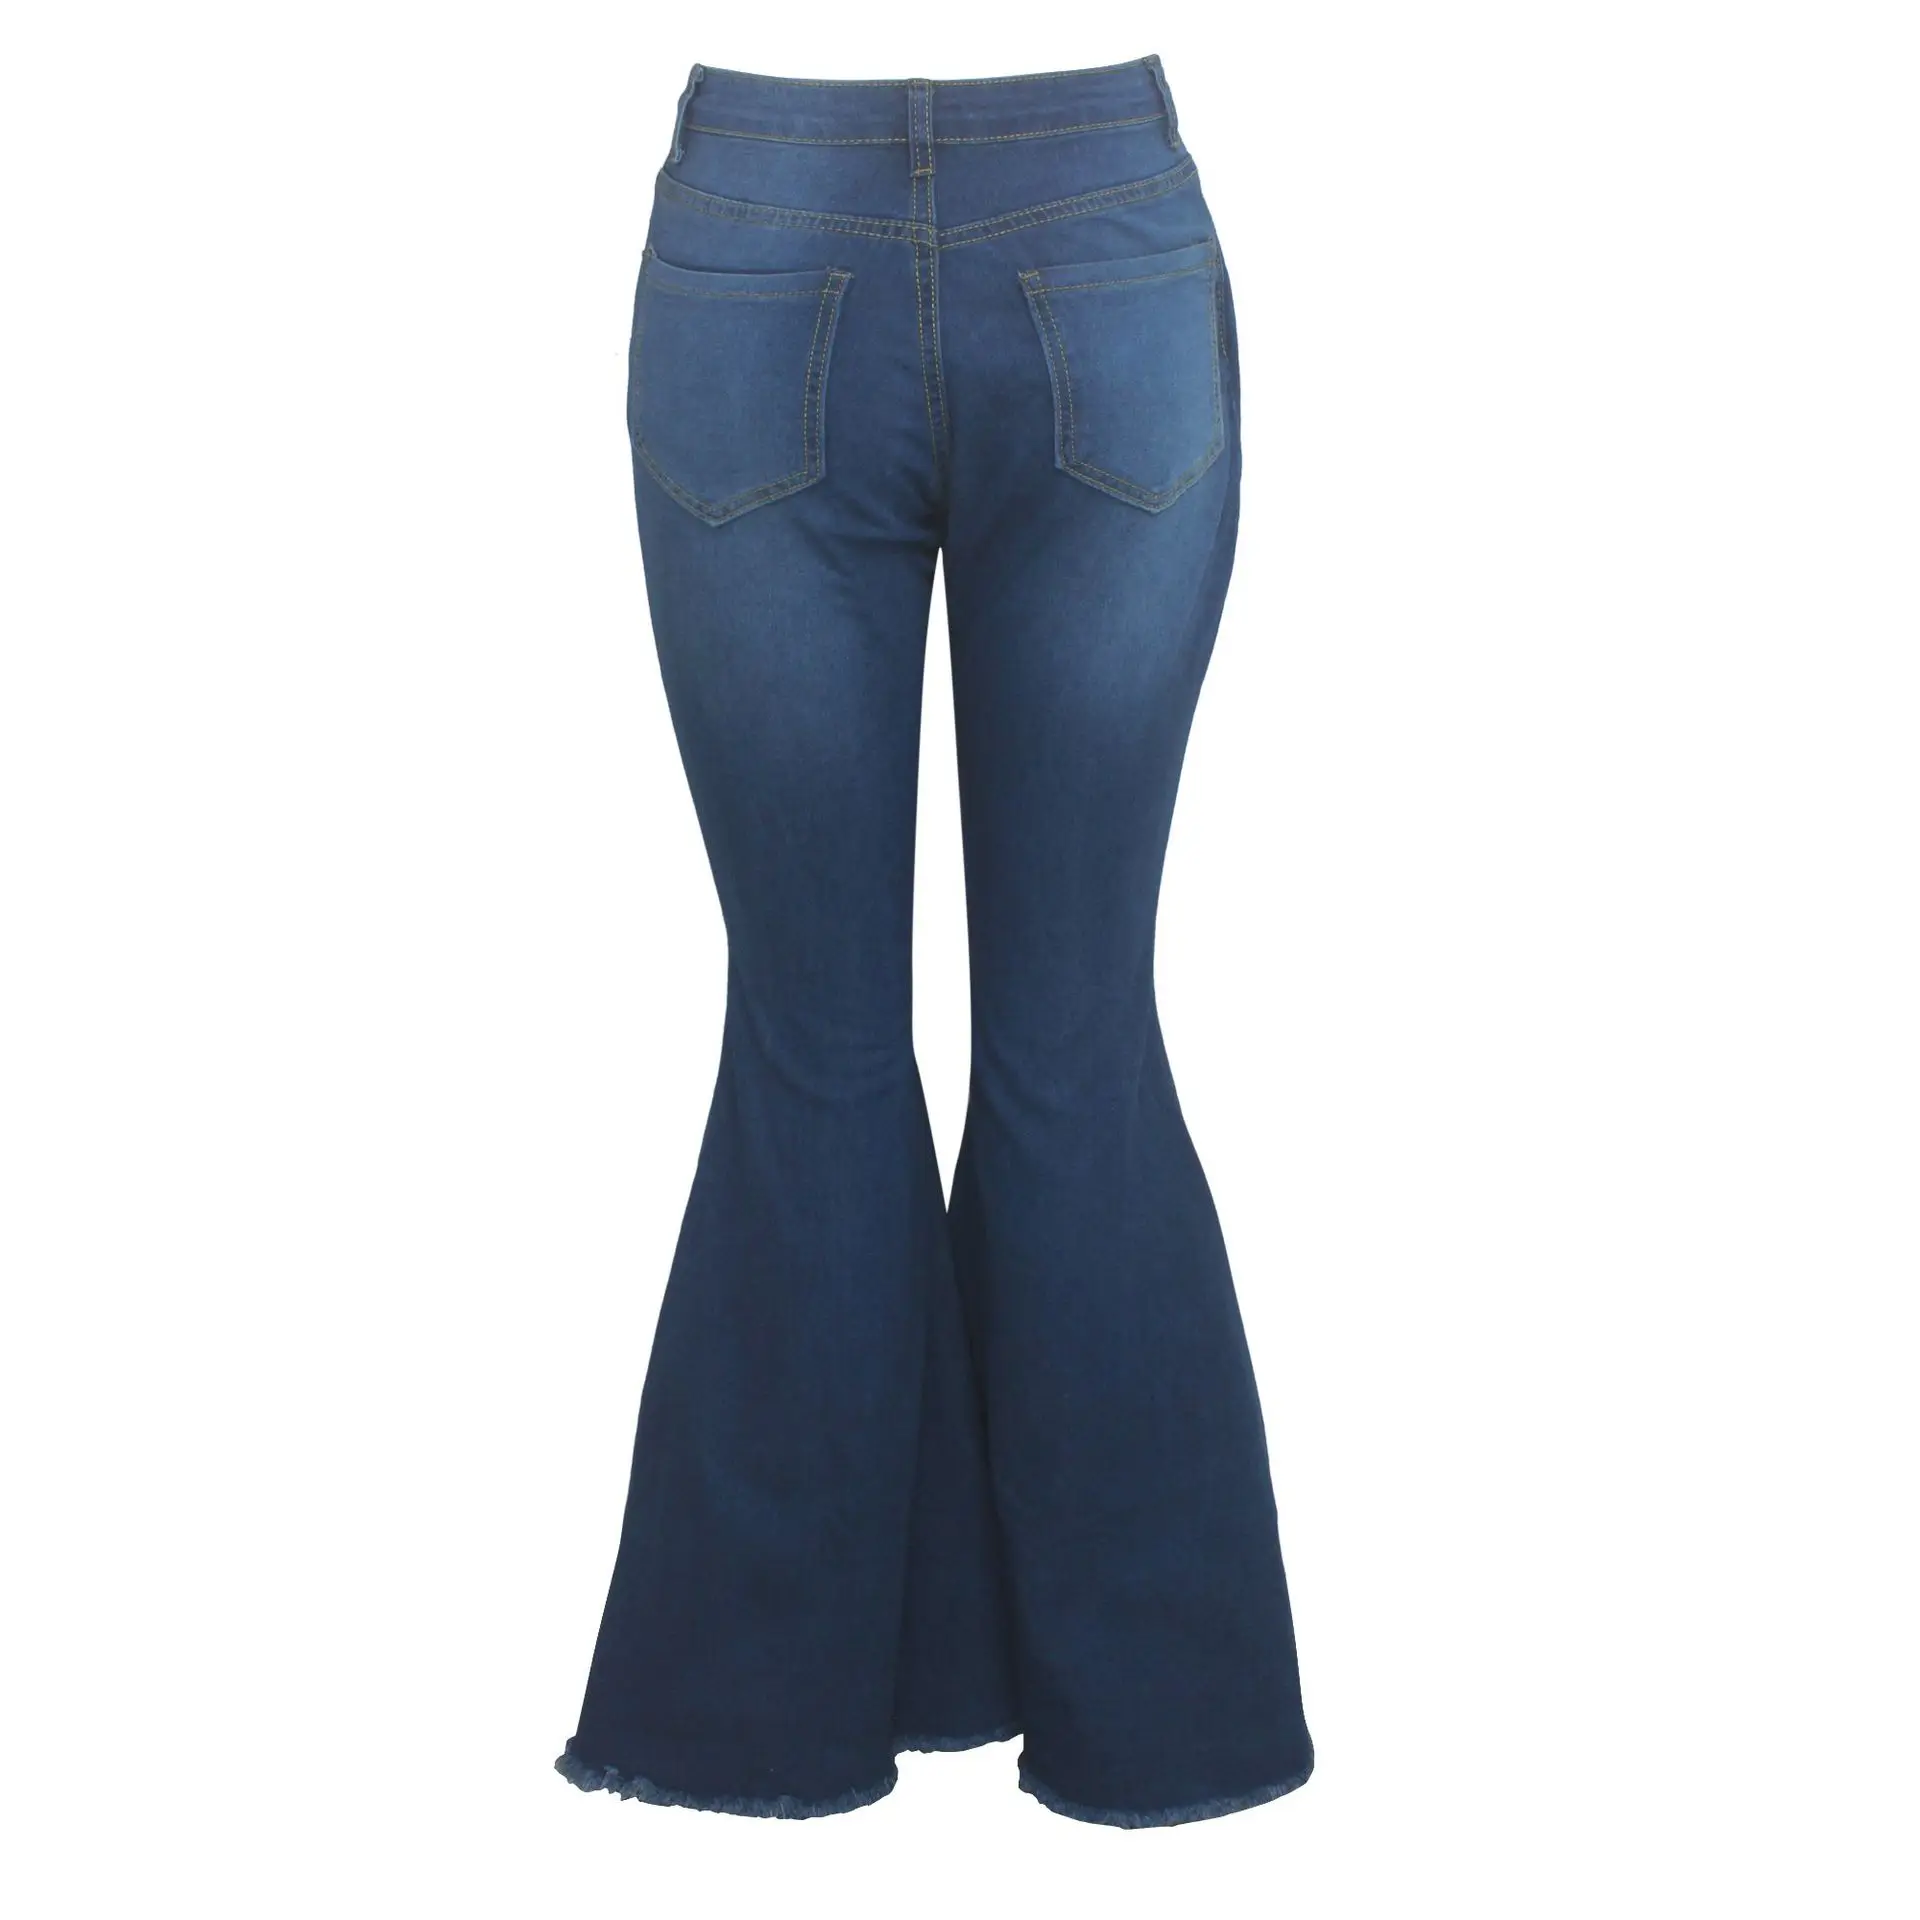 Mt12-2074 Flounce High-rise Cropped Flare Jeans Cotton Denim Jeans ...